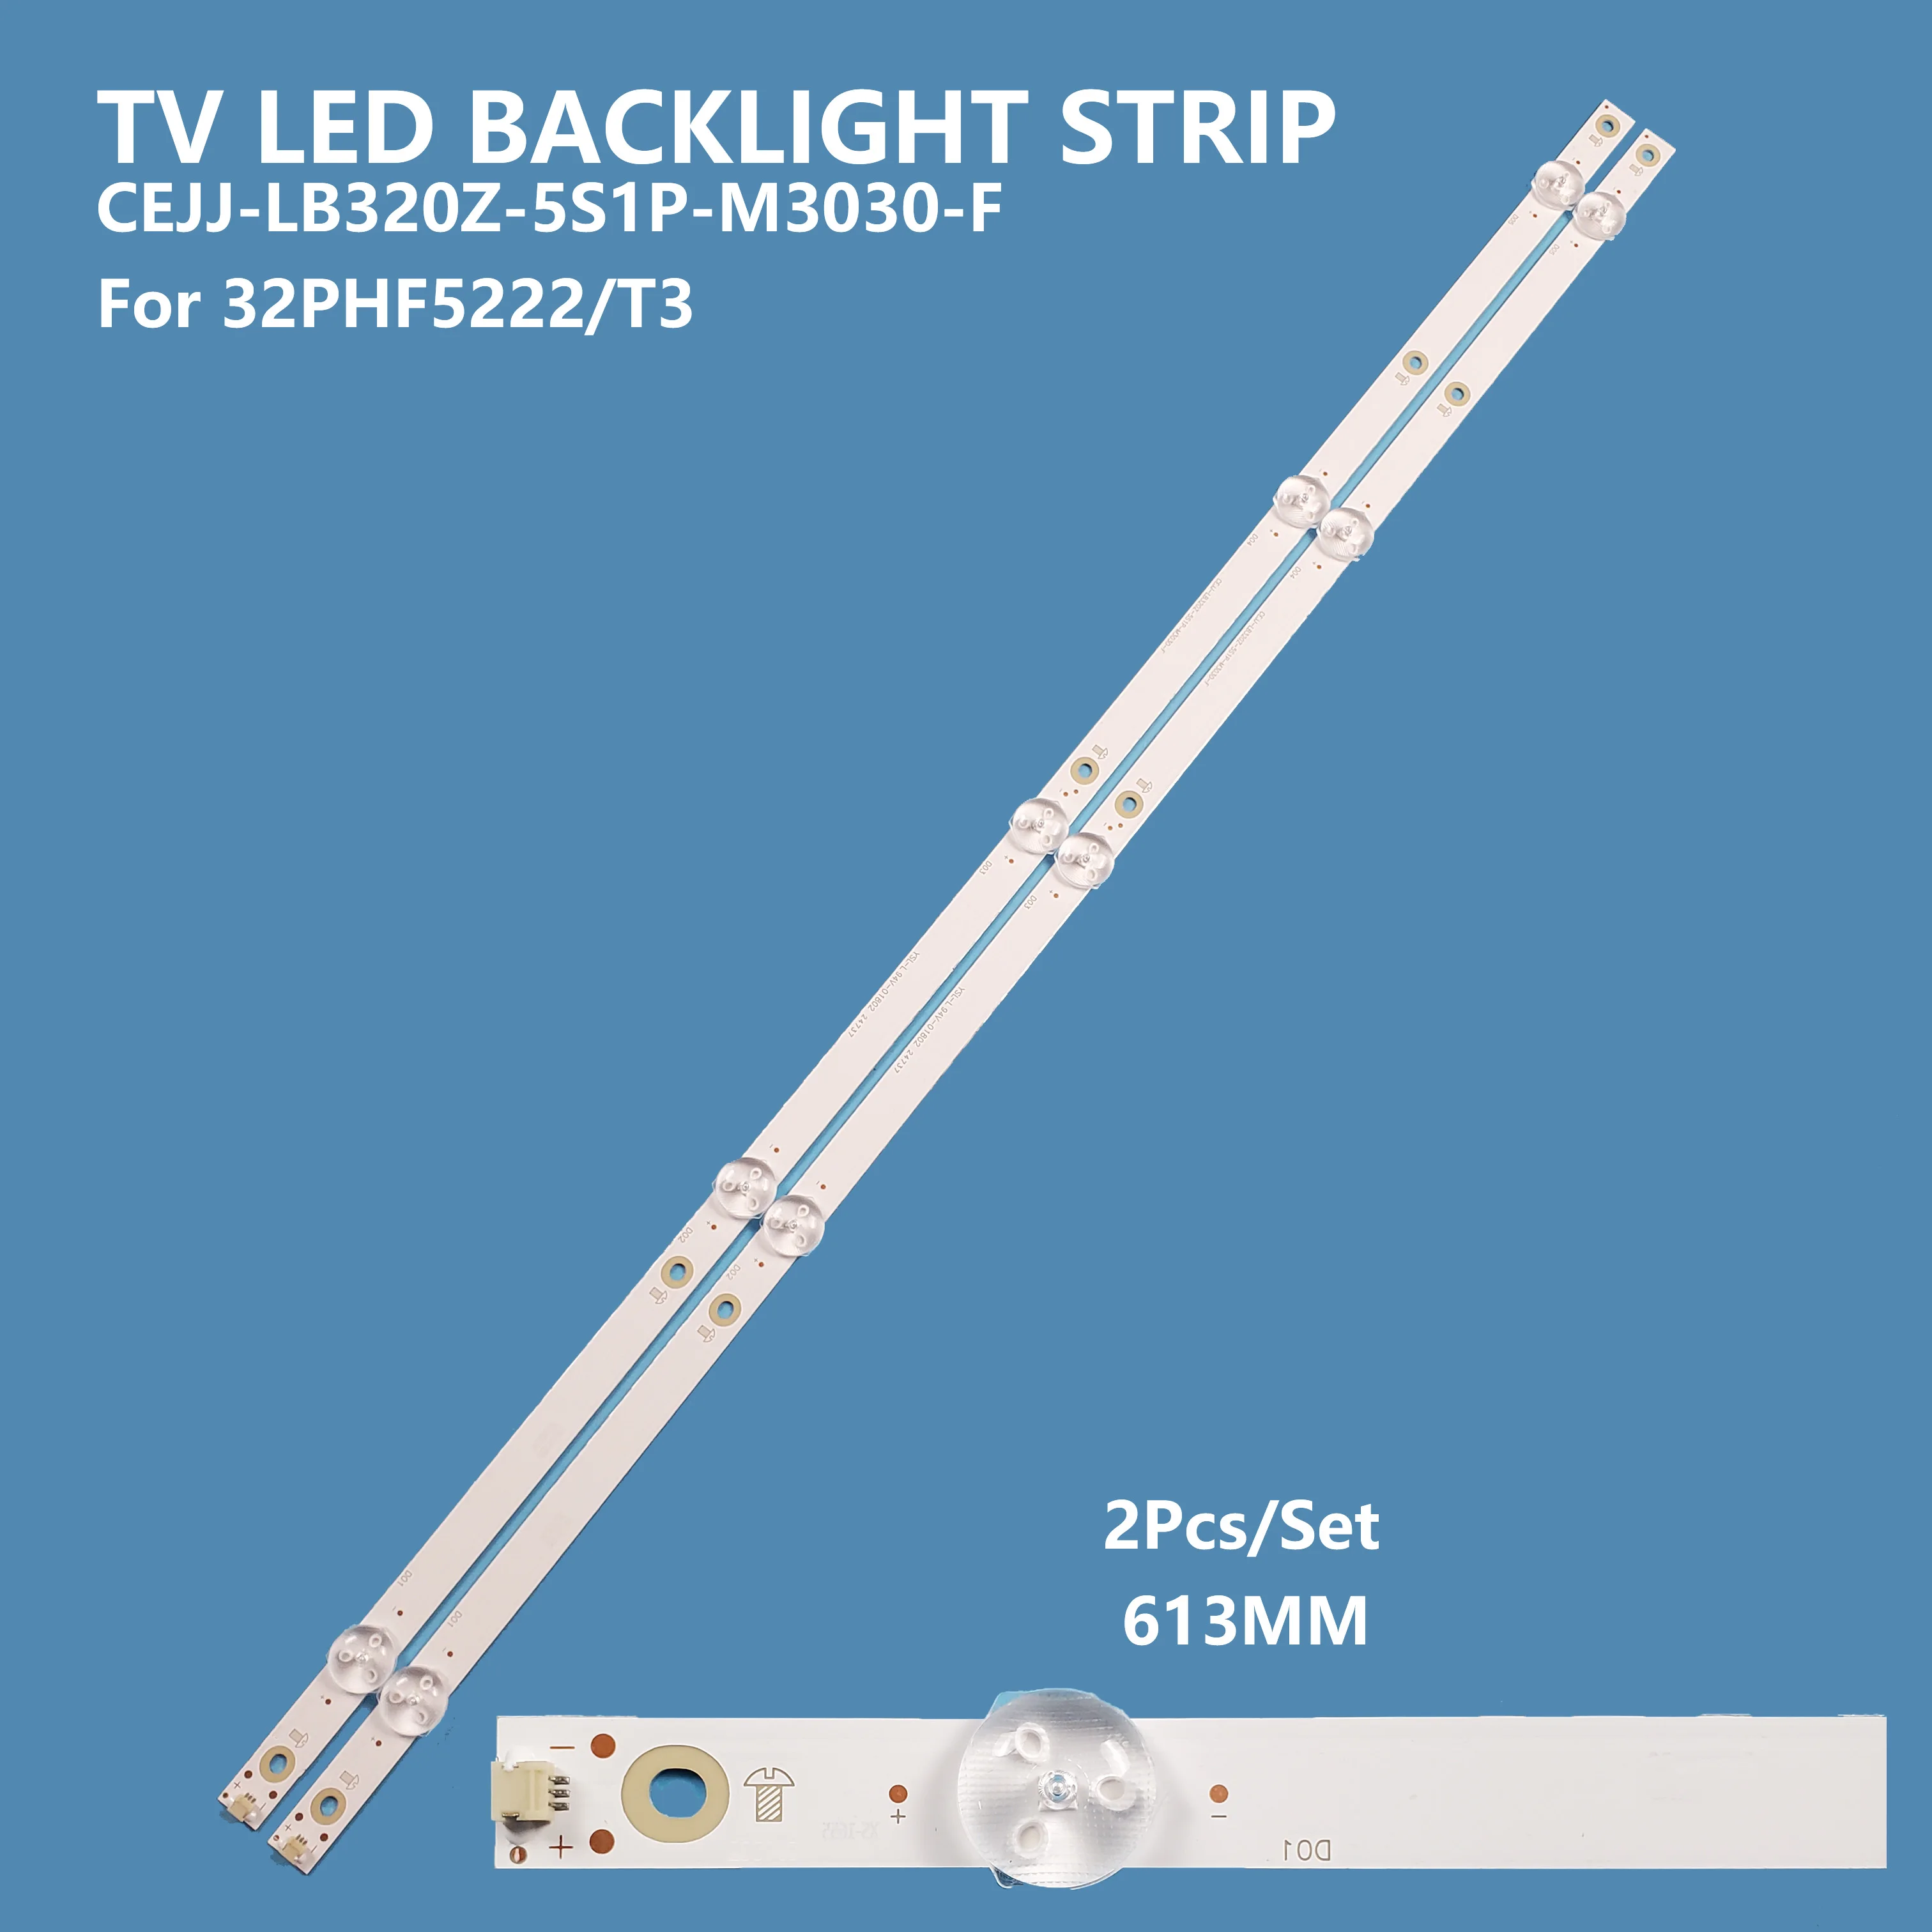 2PCS/set New Arrival TV Led Backlight Strip CEJJ-LB320Z-5S1P-M3030-F For PHILIPS 32inch 32PHF5222/T3 tv Bar Light Accessories for samsung 65inch aot 65 tv ua65nu7100 ua65nu7300 led tv strip light lcd backlight 2pcs led strip tv backlight